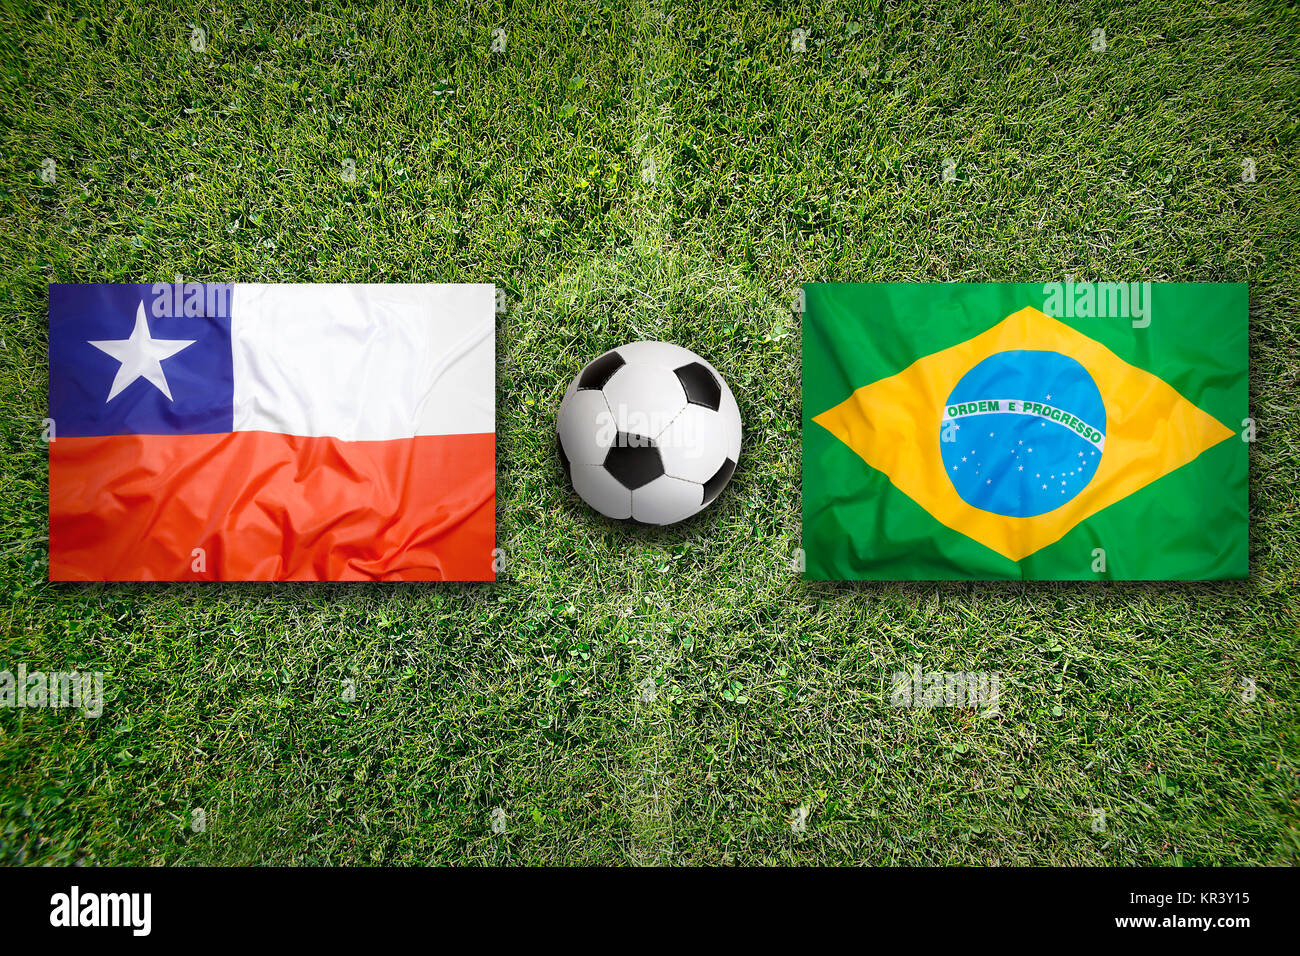 Chile vs. Brazil flags on soccer field Stock Photo - Alamy